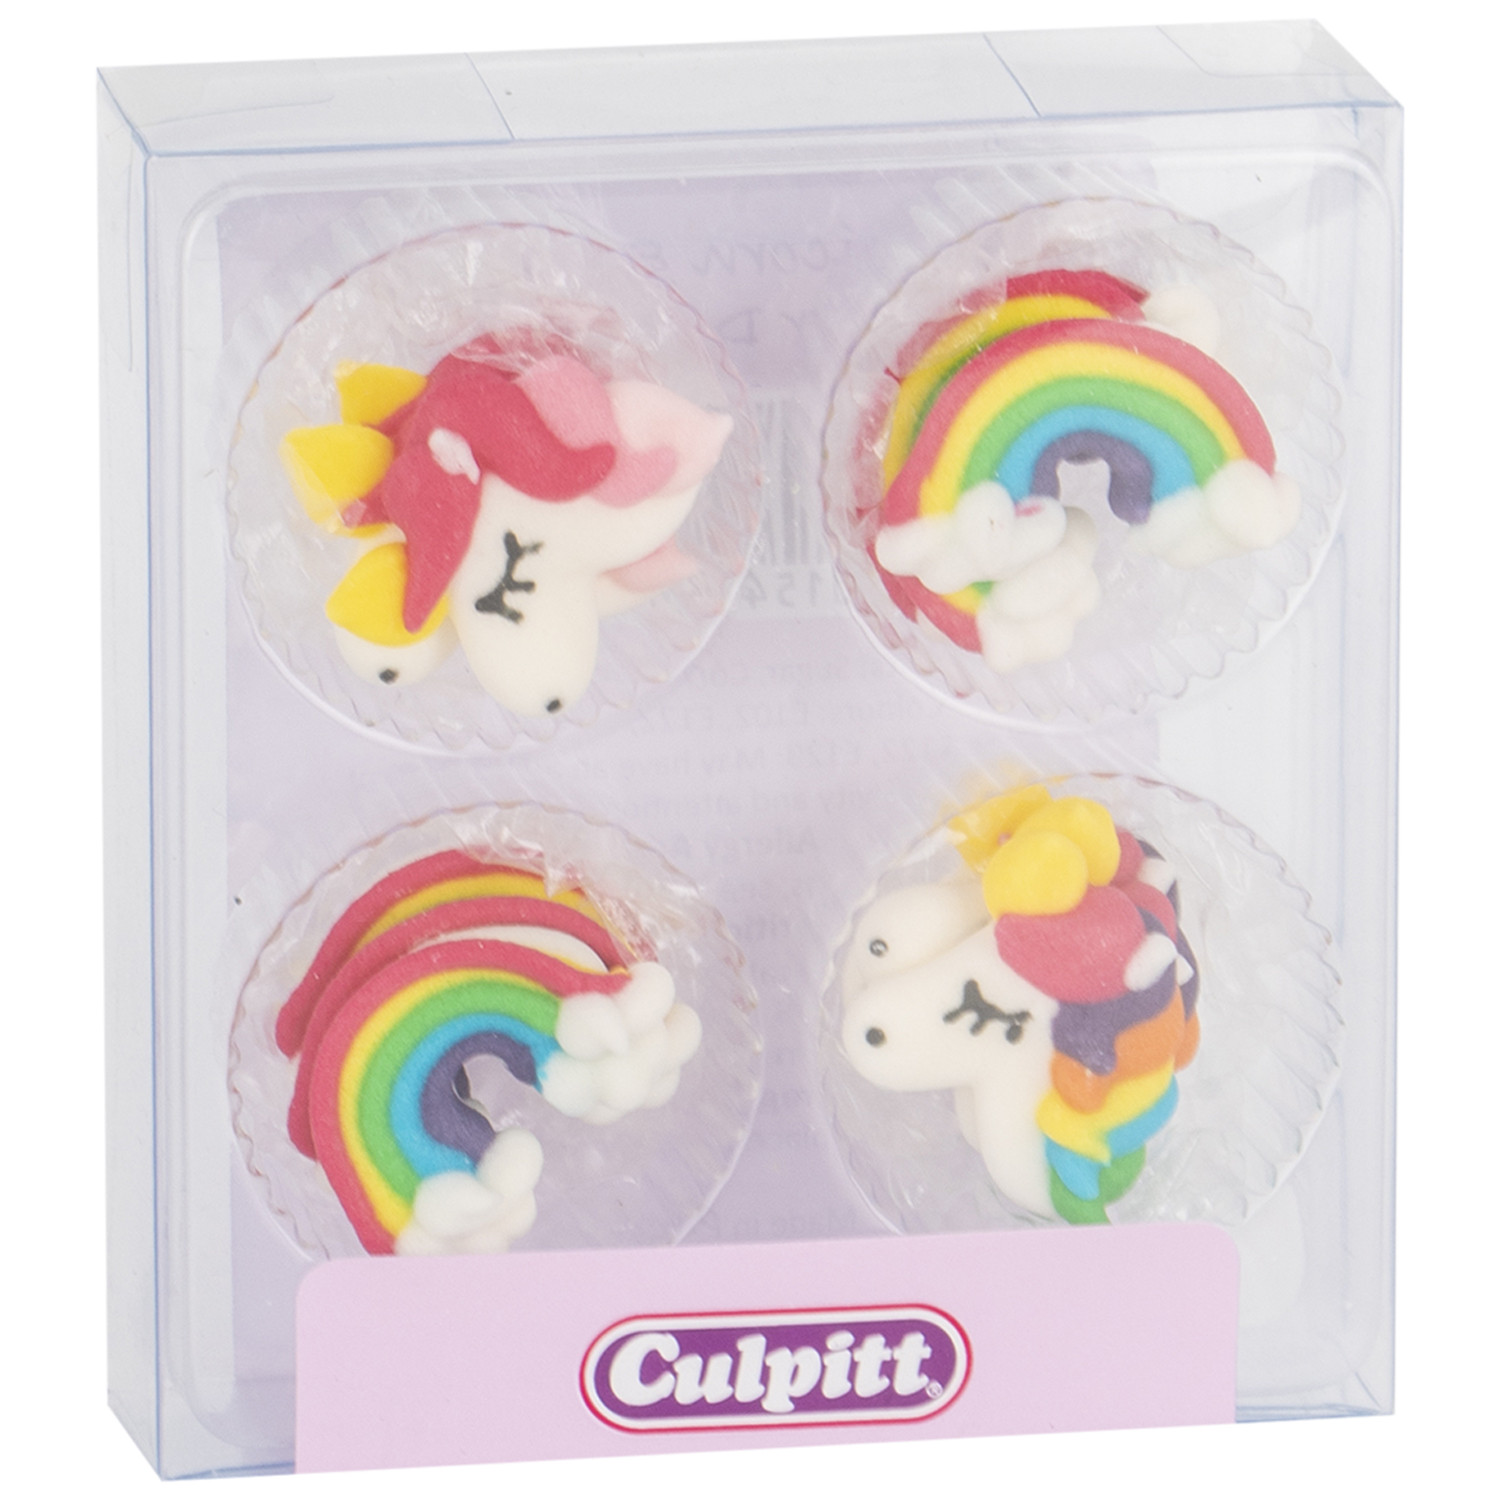 Pack of 12 Decorational Sugar Pipings - Unicorns and Rainbows Image